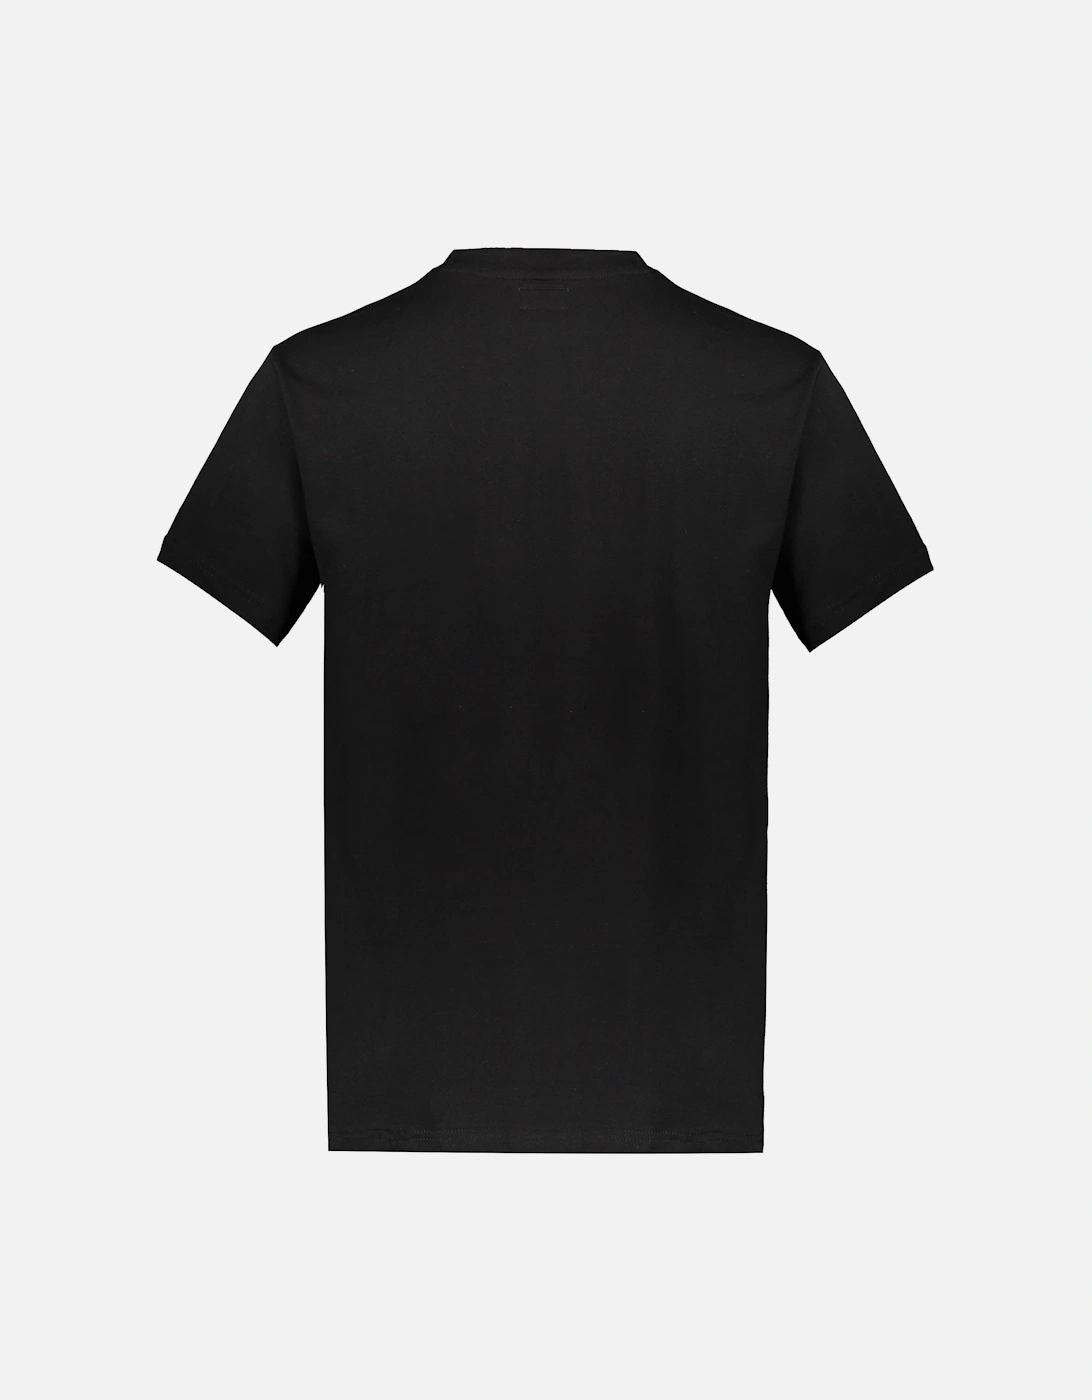 Air Transit Puff T-Shirt - Black